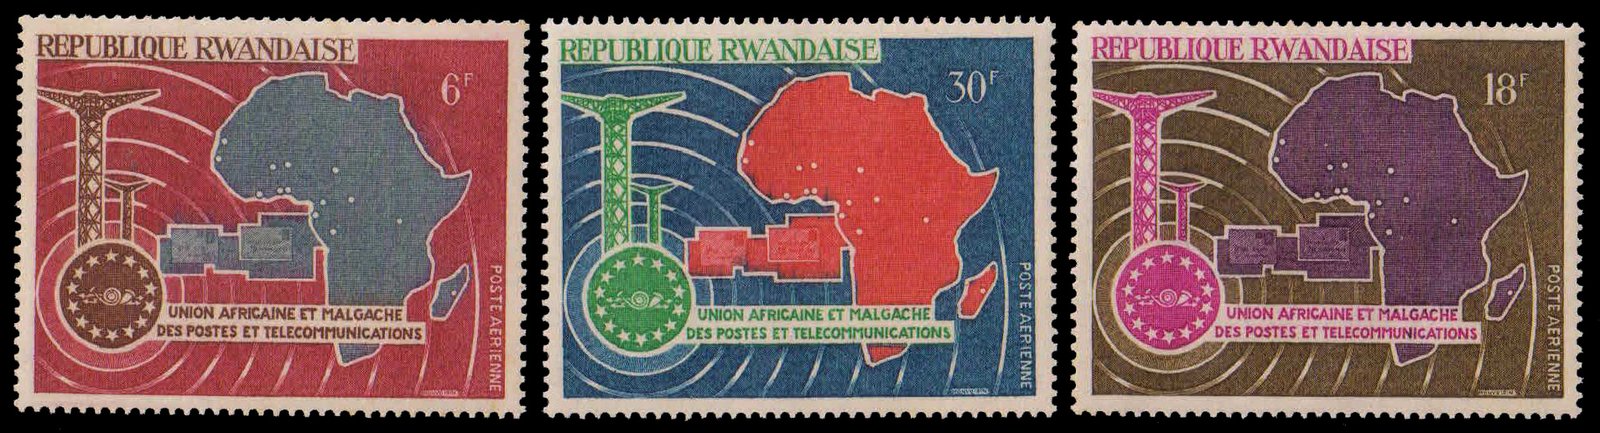 RWANDA 1967-5th Anniv. of UAMPT, Map of Africa, Letter, Pylons, Set of 3, MNH, S.G. 230-32